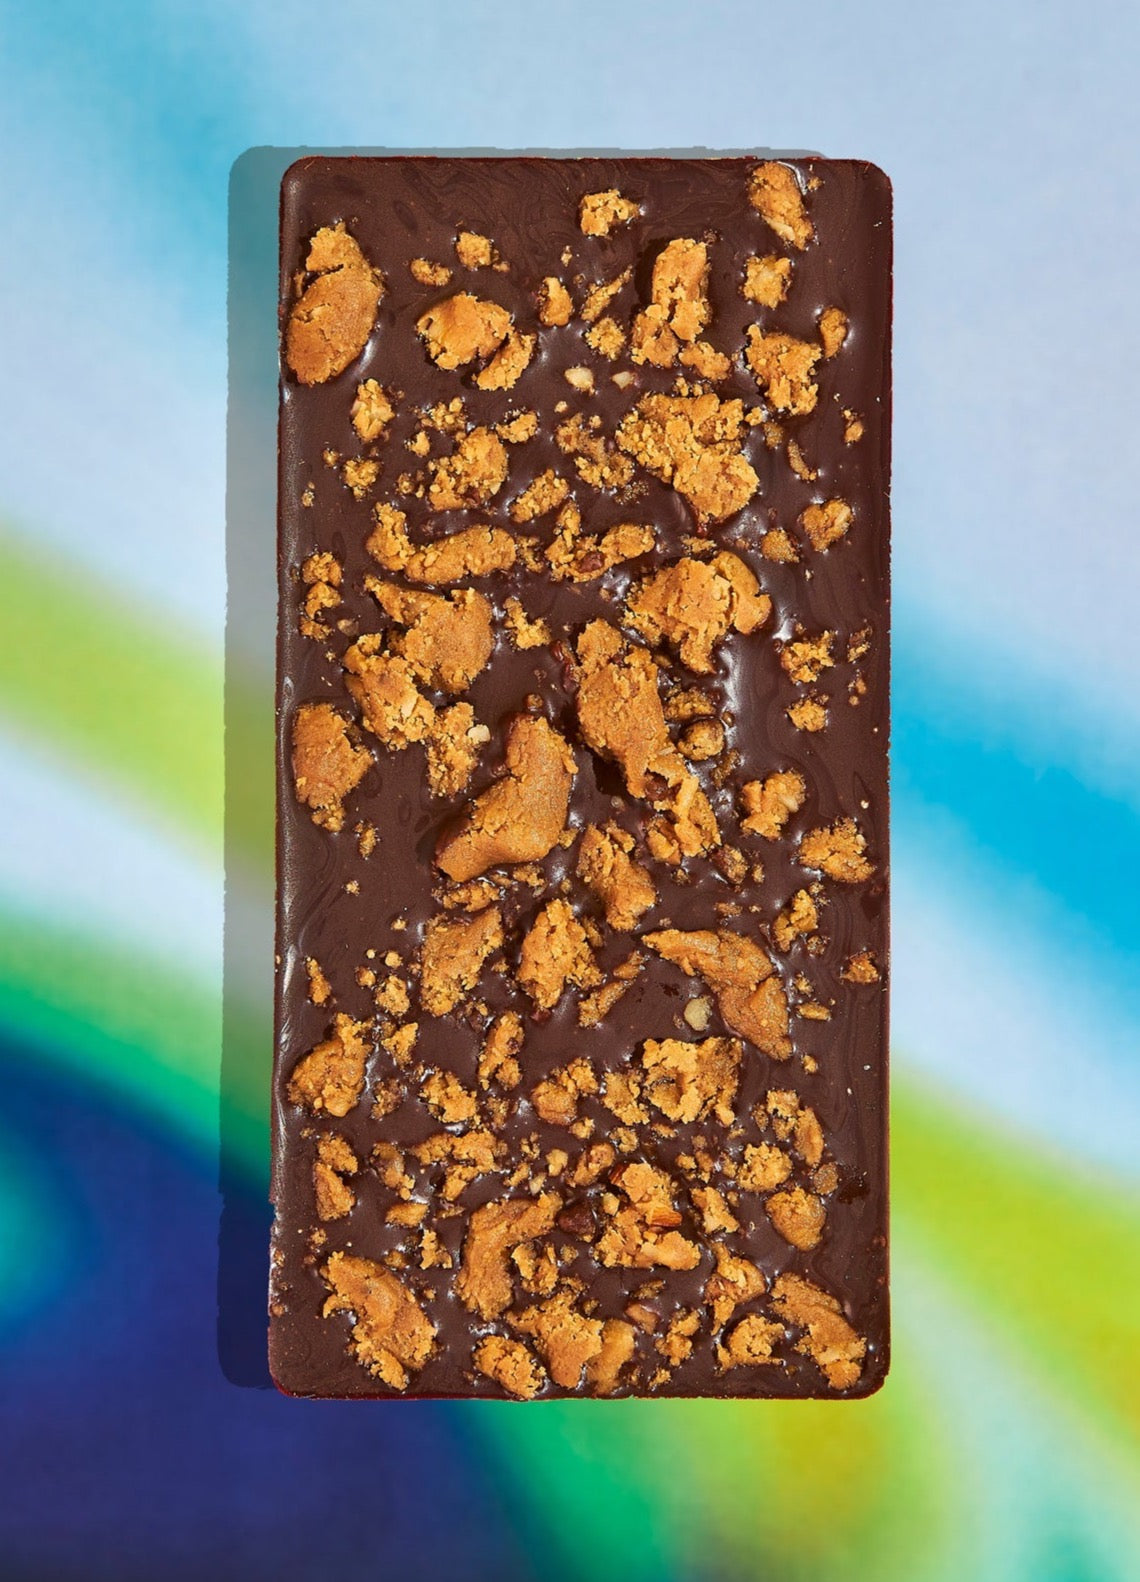 Cookie chunks chocolate bars in the USA